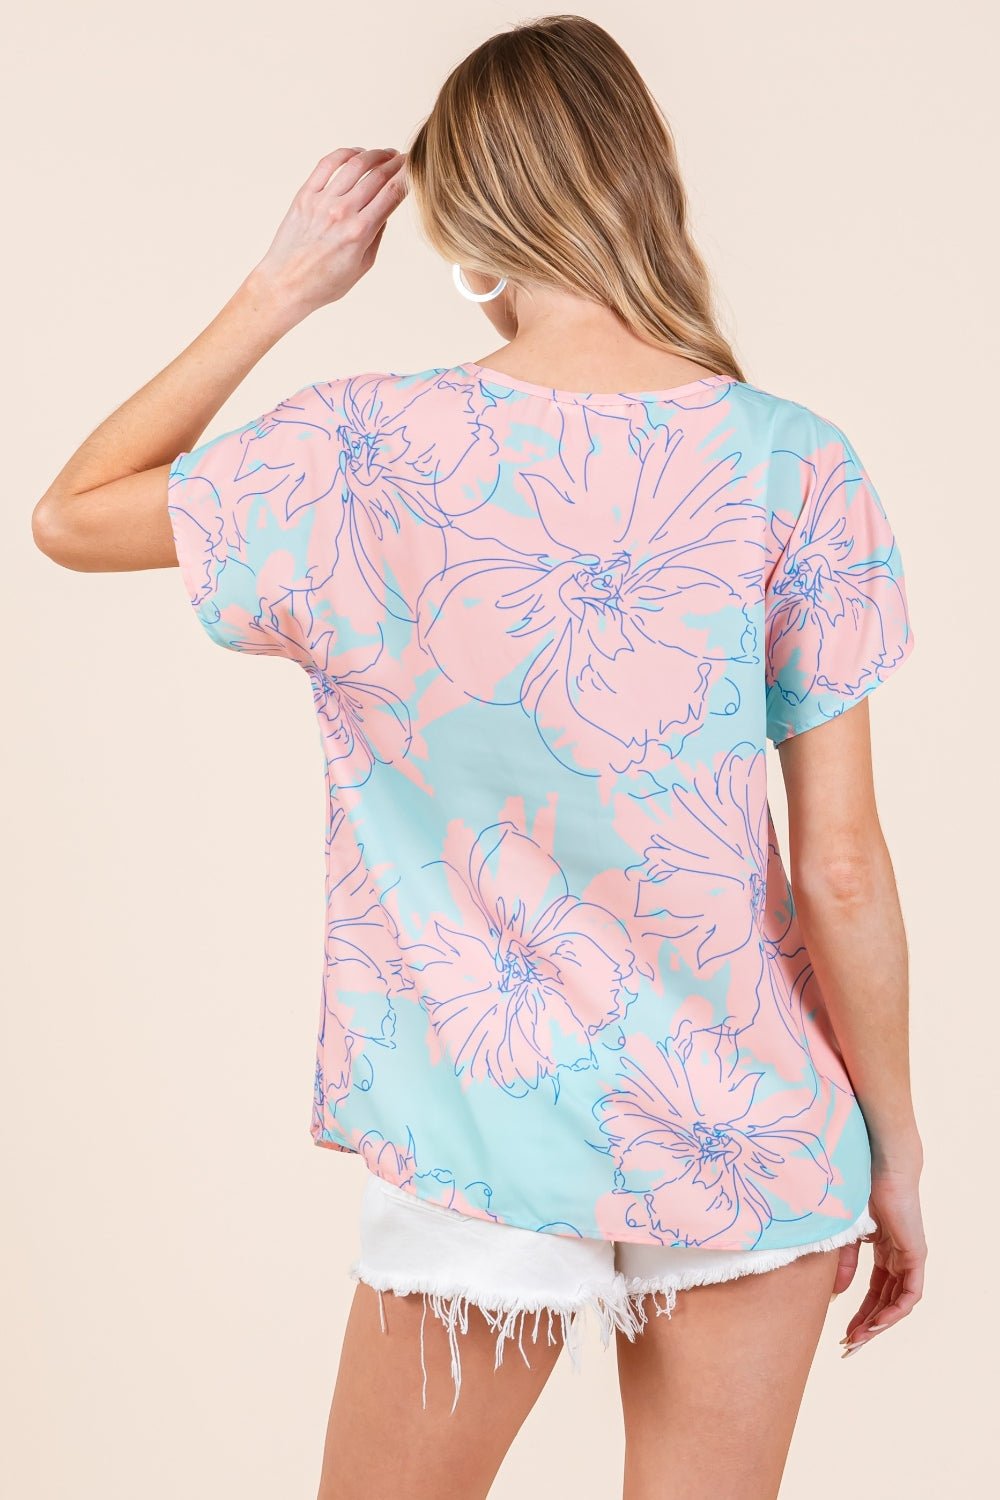 Floral Short Sleeve T-Shirt in Aqua PinkT-ShirtBOMBOM